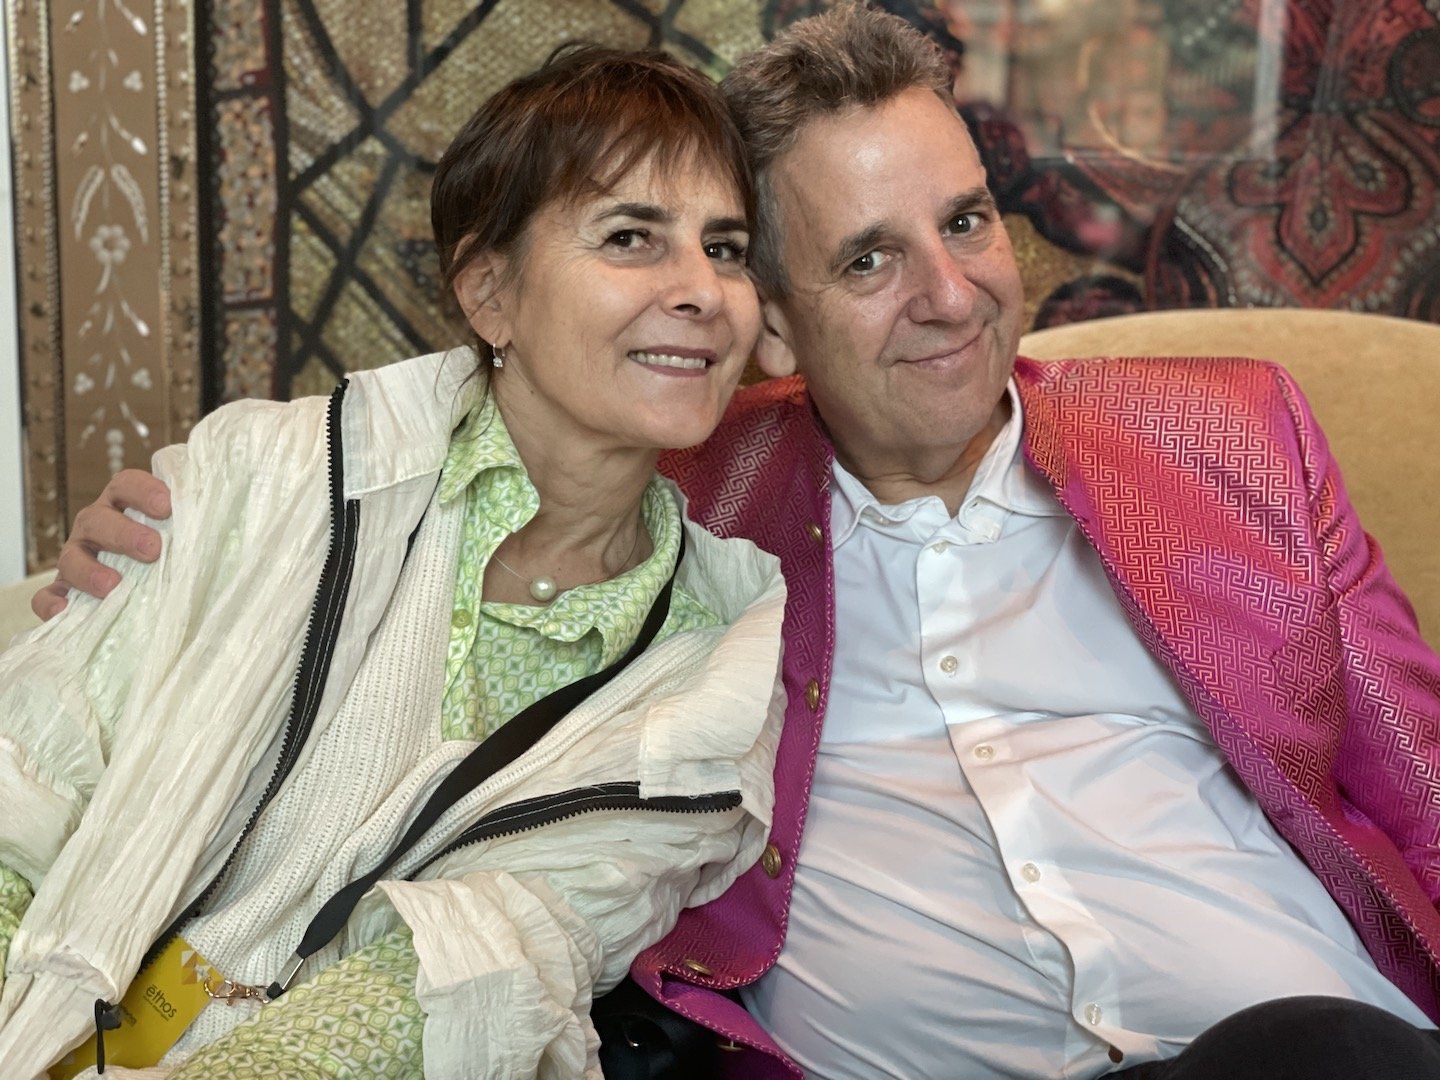 Mr. & Mrs. Jean Marie Schaller at the GPHG 2022 India Exhibit